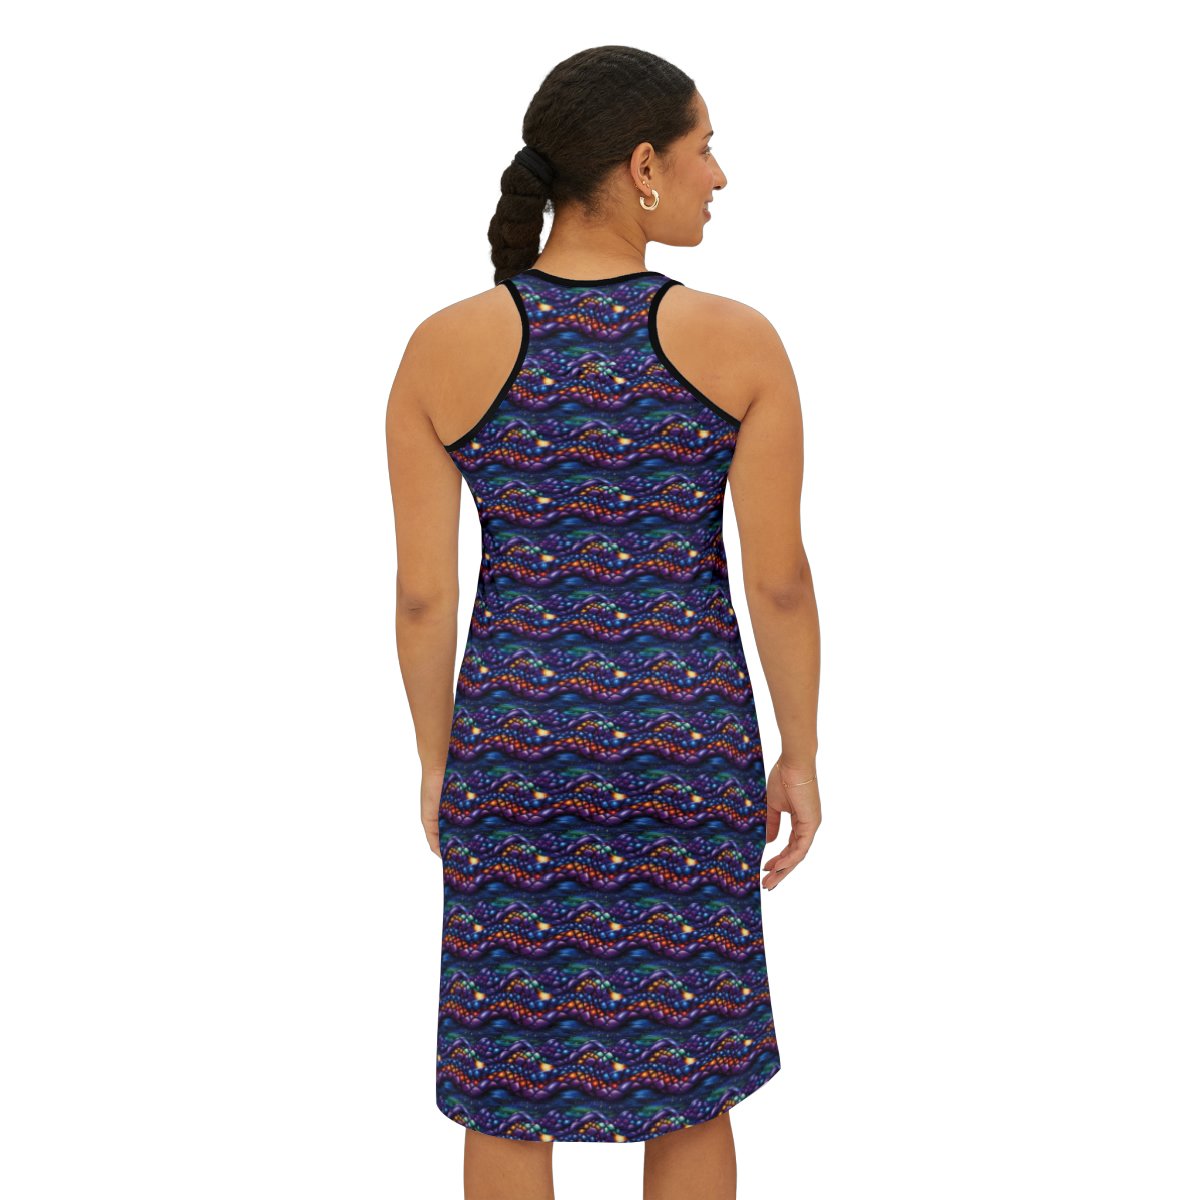 Diamond Abstract - Tiny Print - Multi Colors - Women's Racerback Dress (AOP)